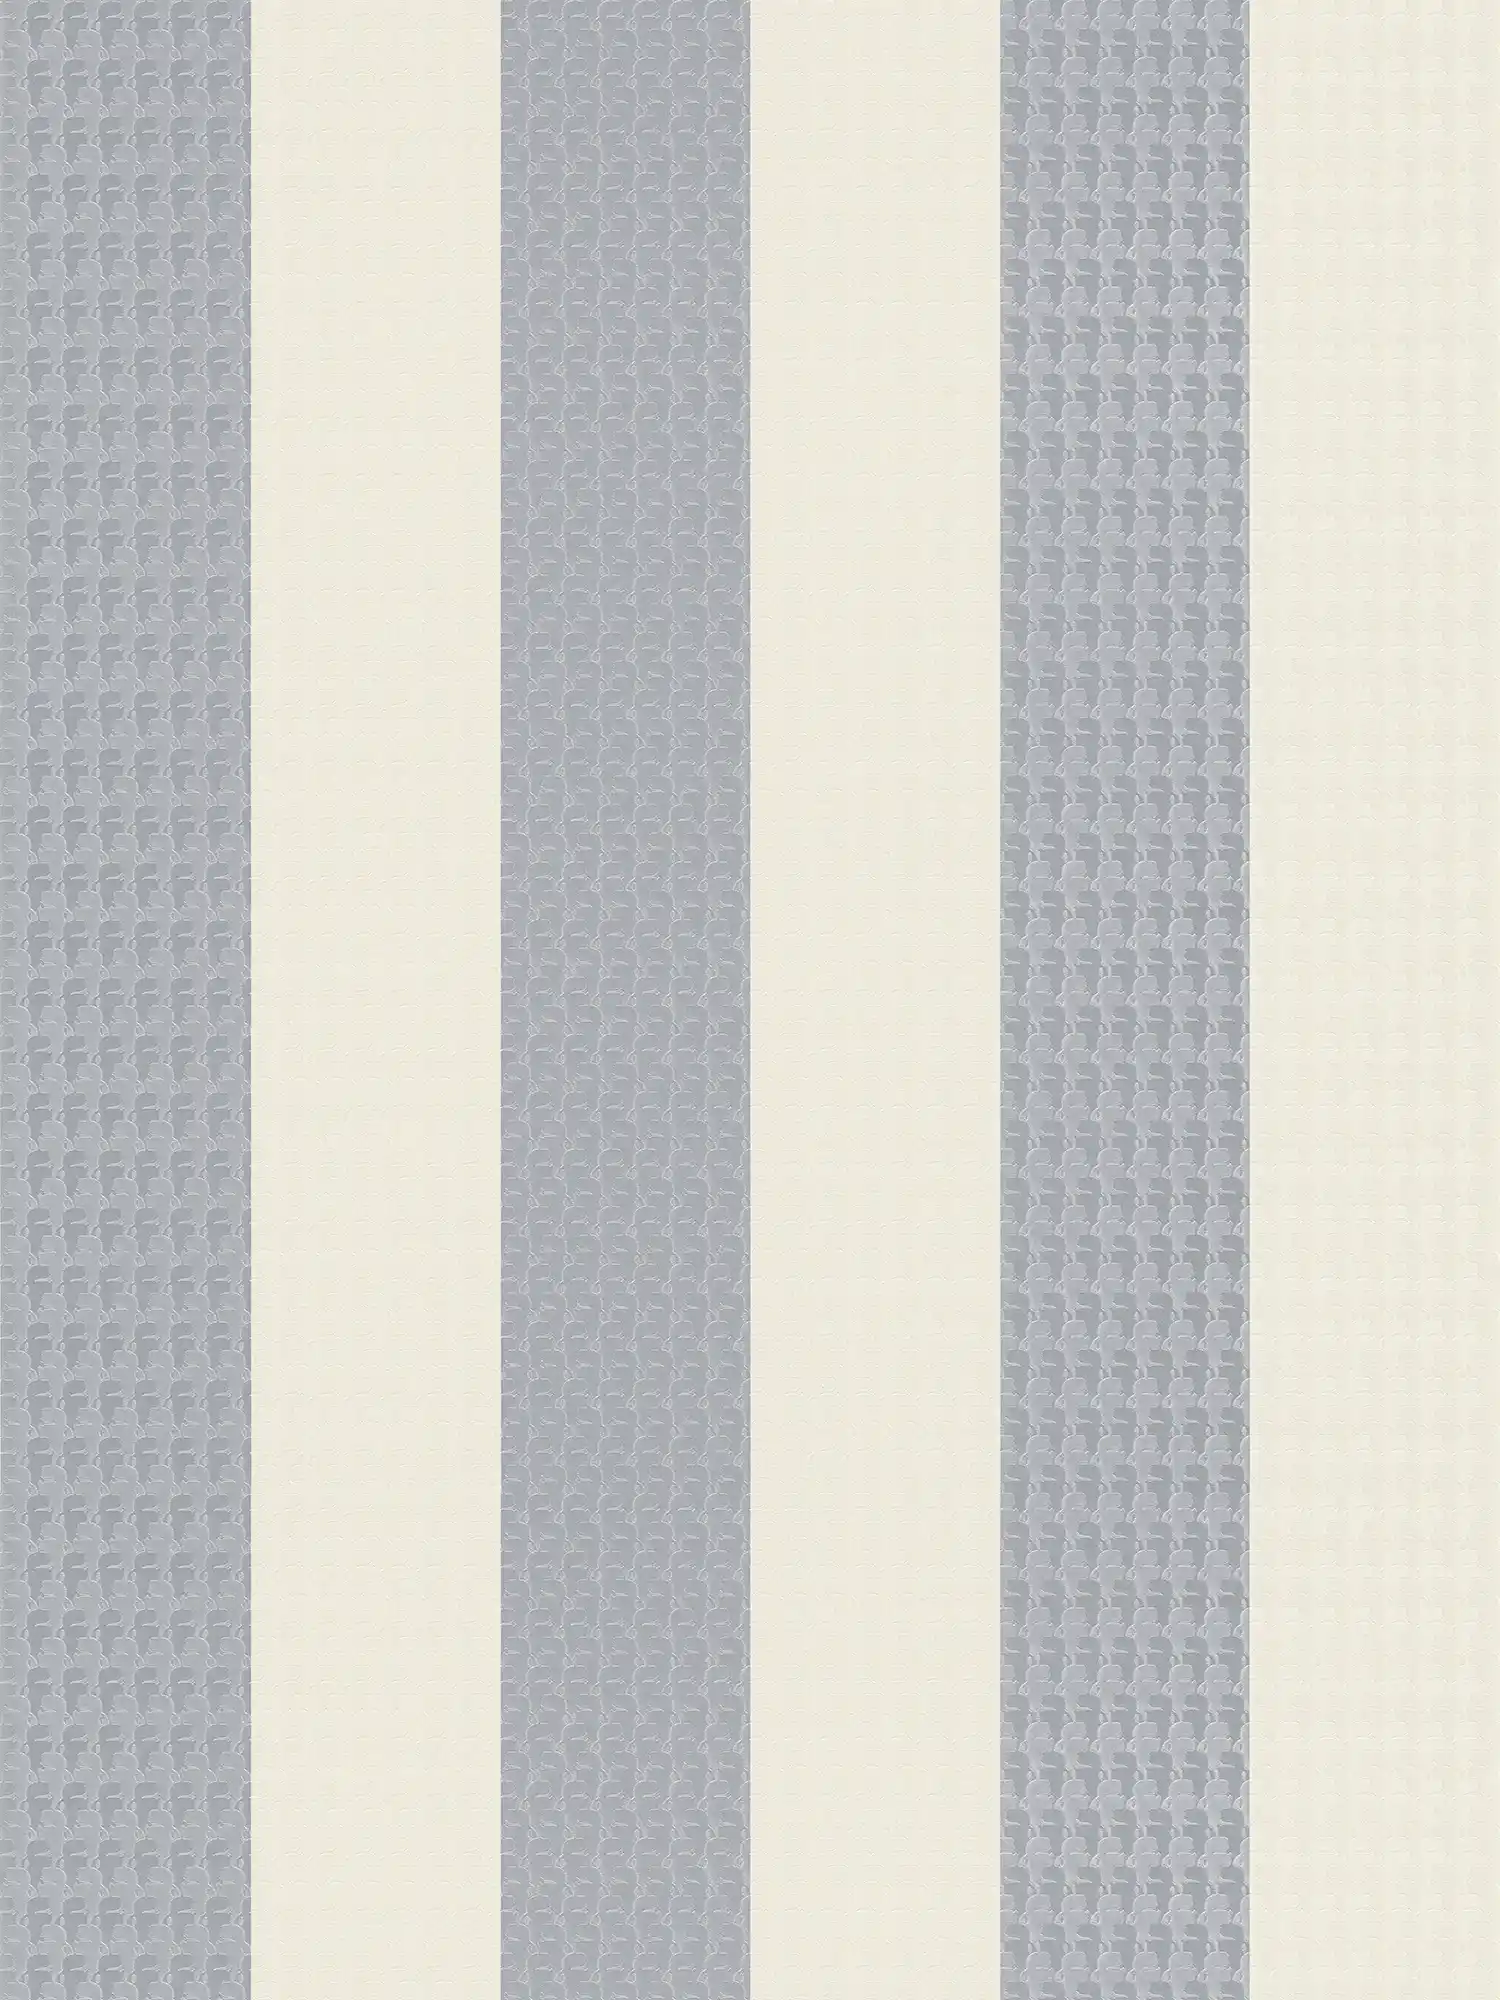 Wallpaper Karl LAGERFELD stripes & texture pattern - cream, grey
